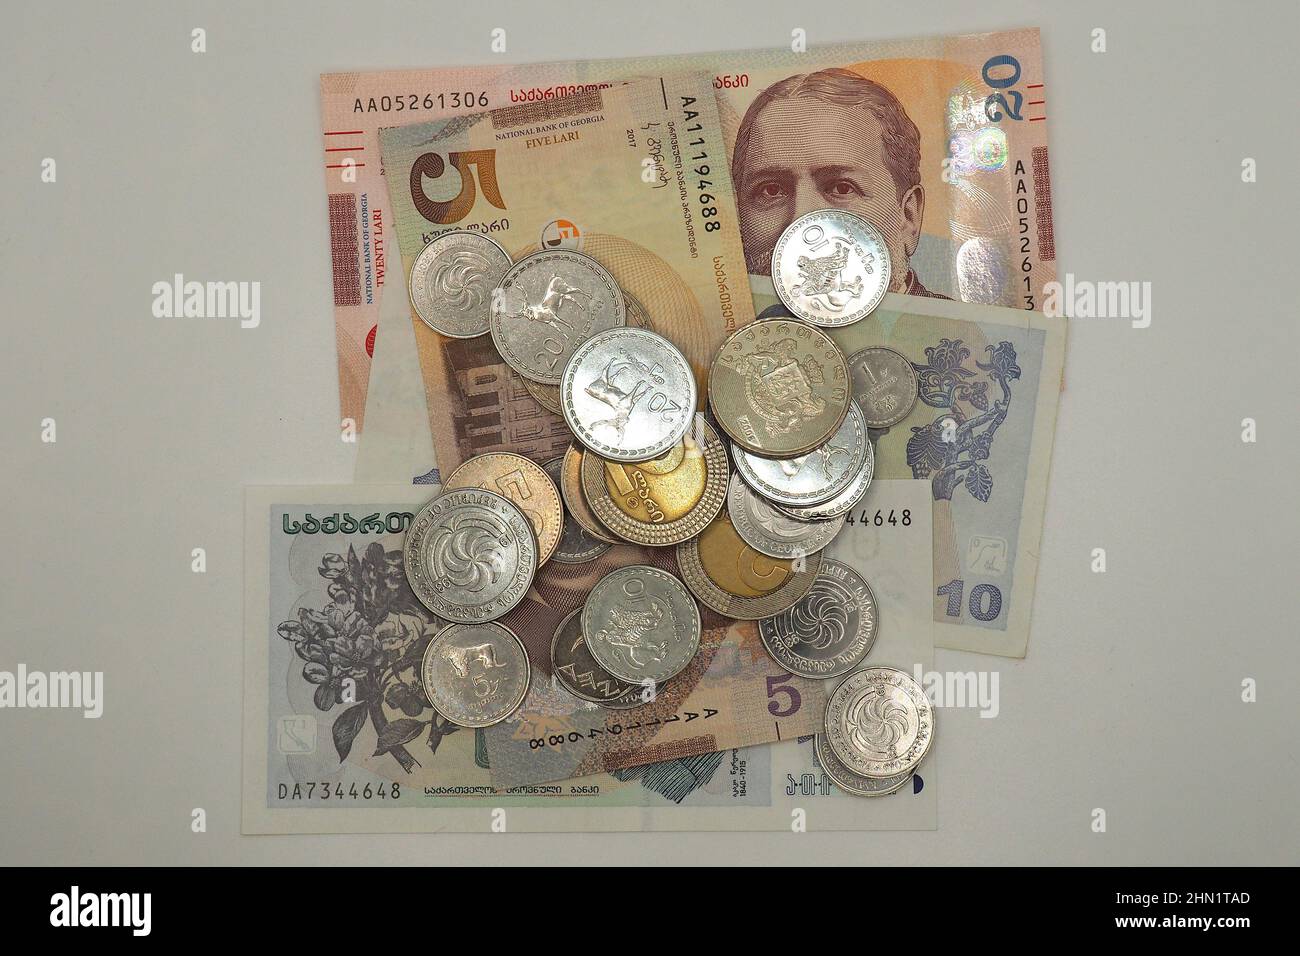 lari coins and banknotes, Georgian lari (GEL), Georgia, Europe Stock Photo